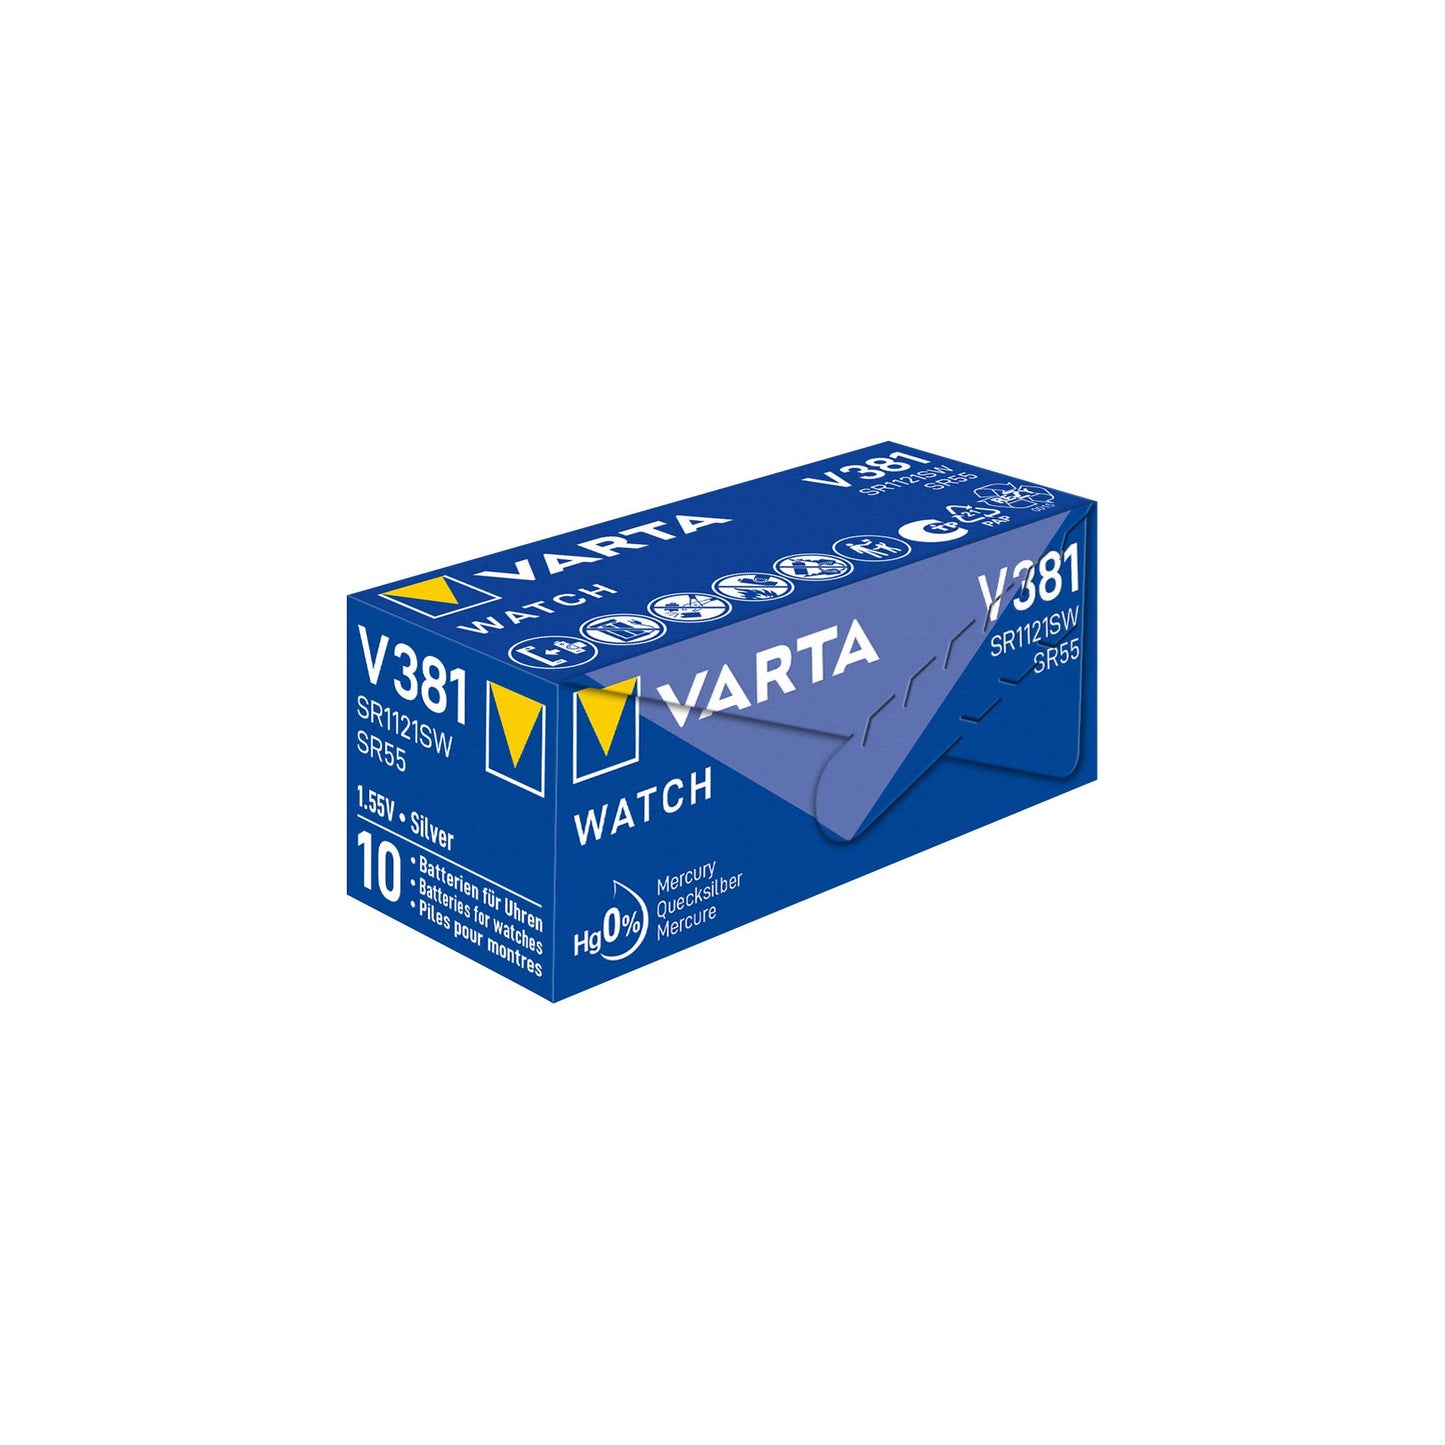 VARTA Batterie Silver Oxide Knopfzelle 381, SR55, 1.55V, Watch, Retail (10-Pack)